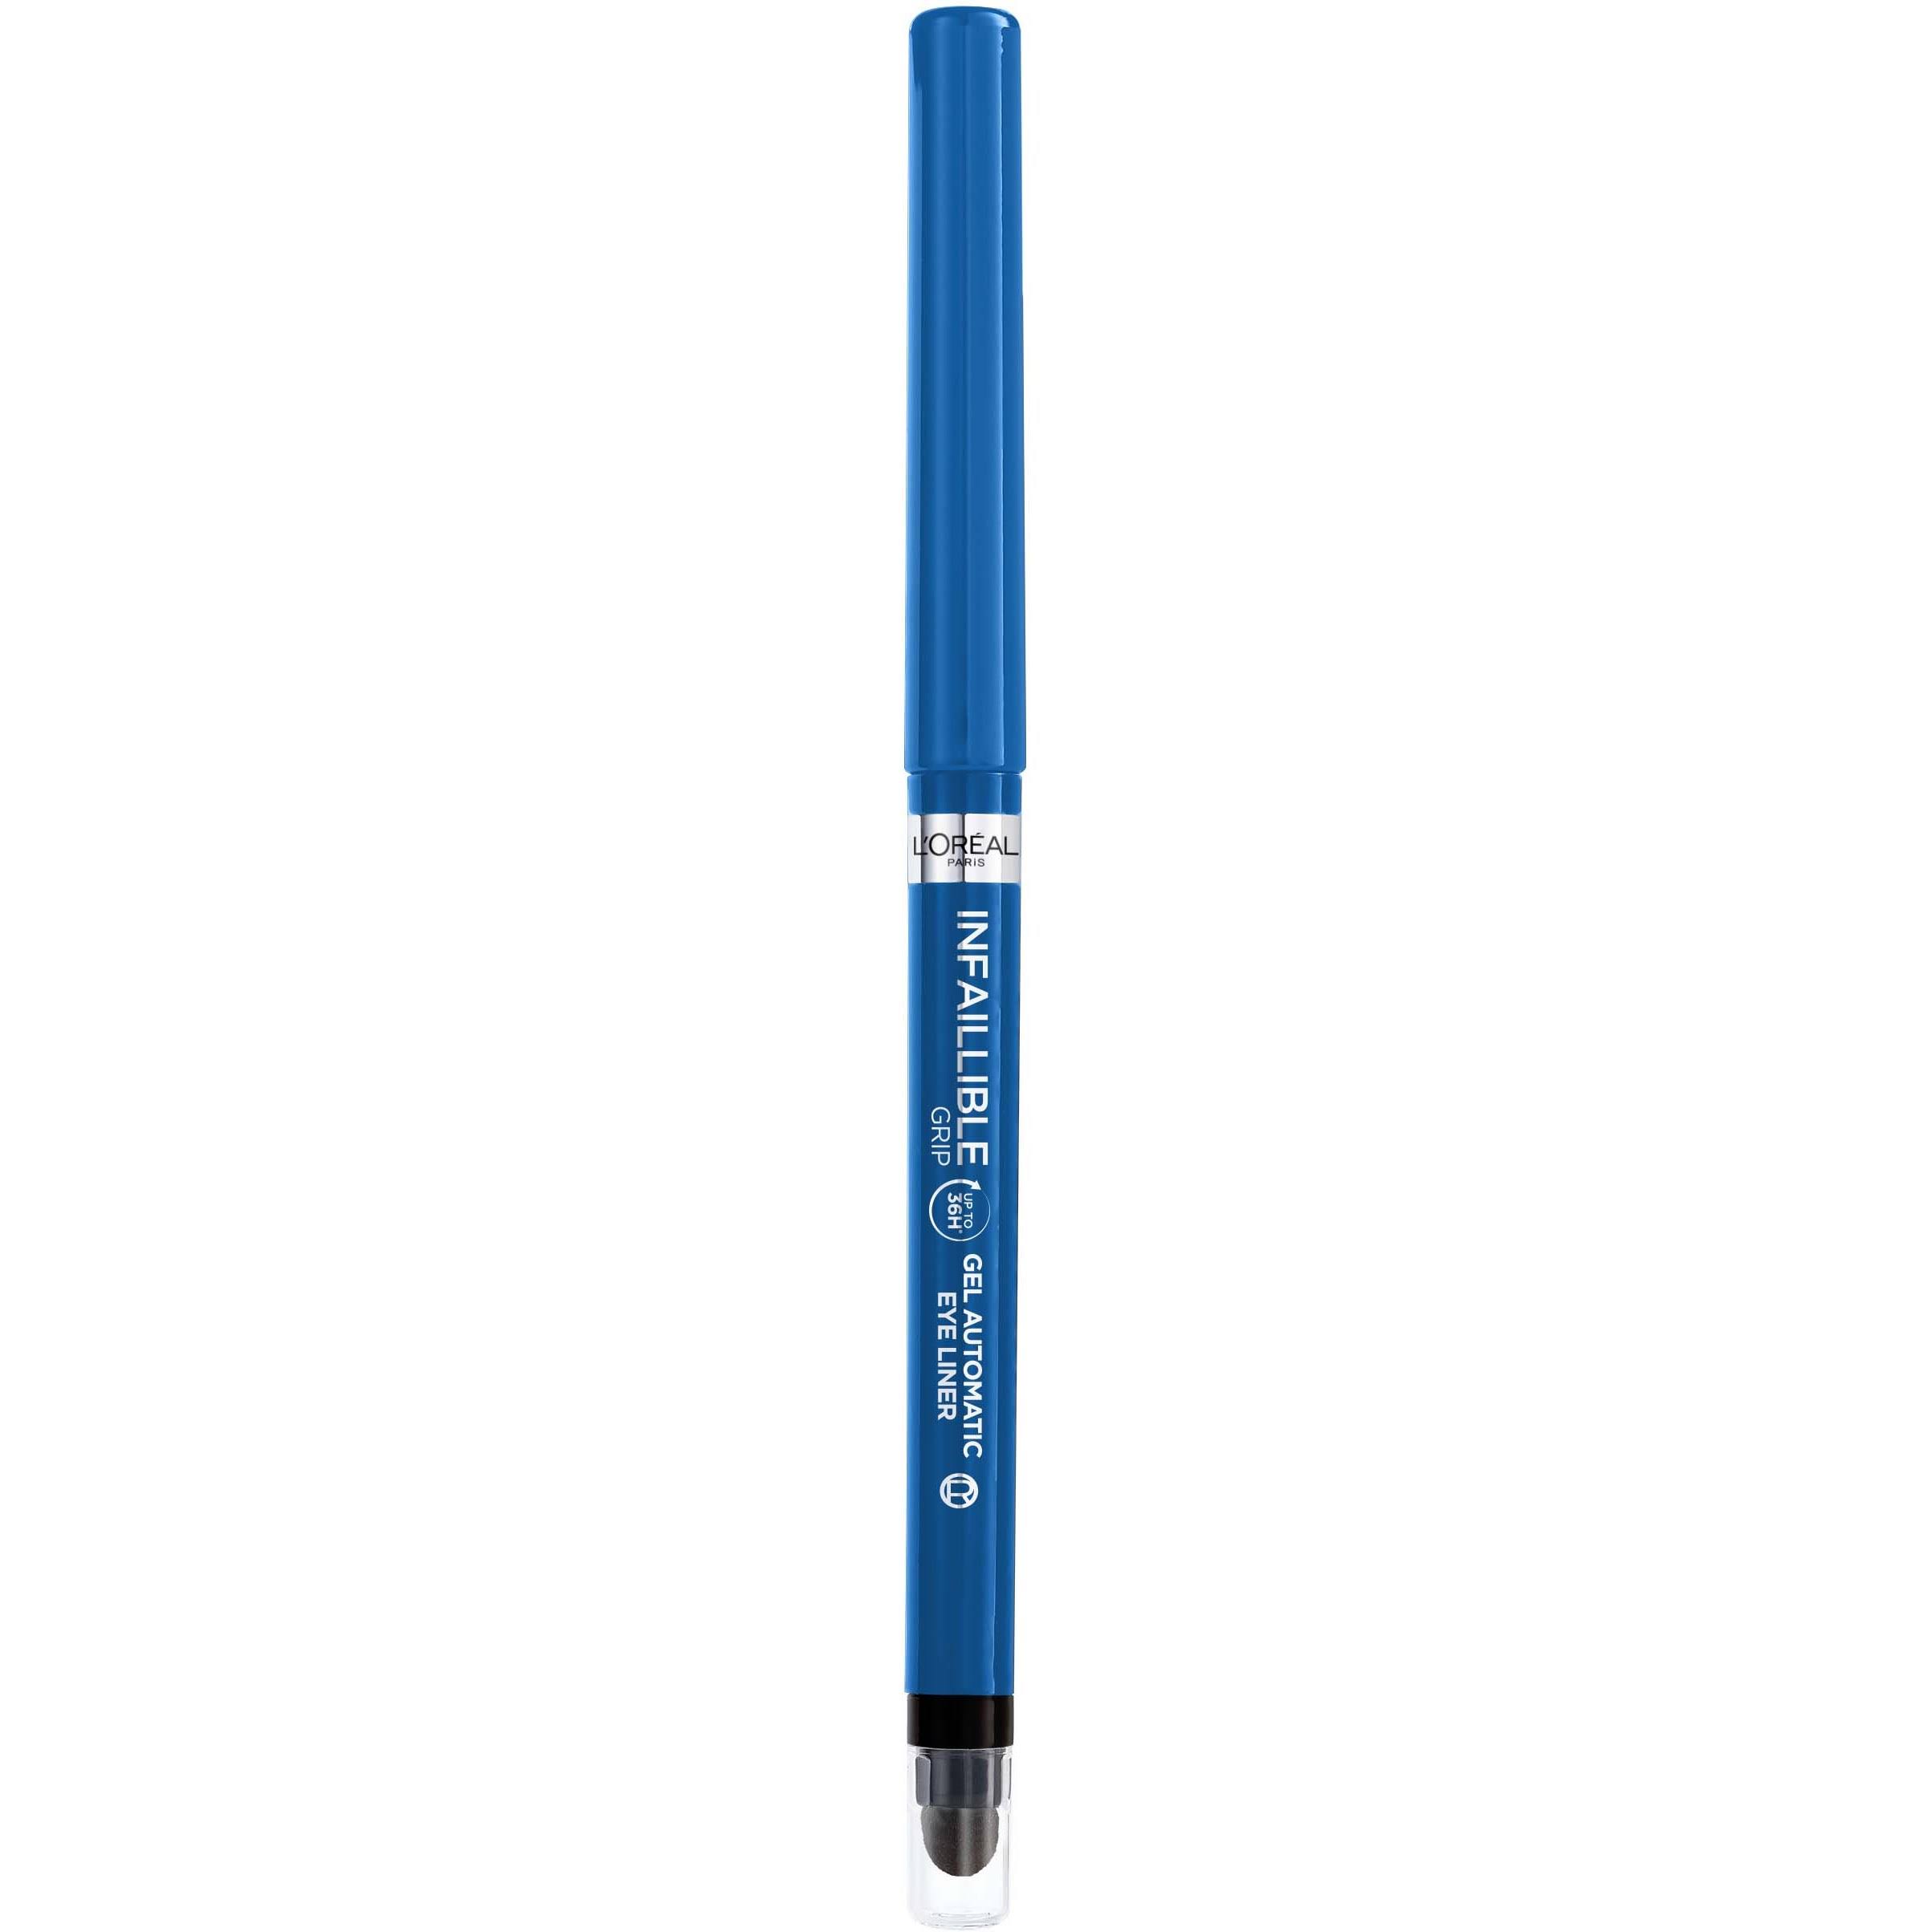 L'Oreal Paris Infallible Grip 36h Gel Eyeliner - Electric Blue